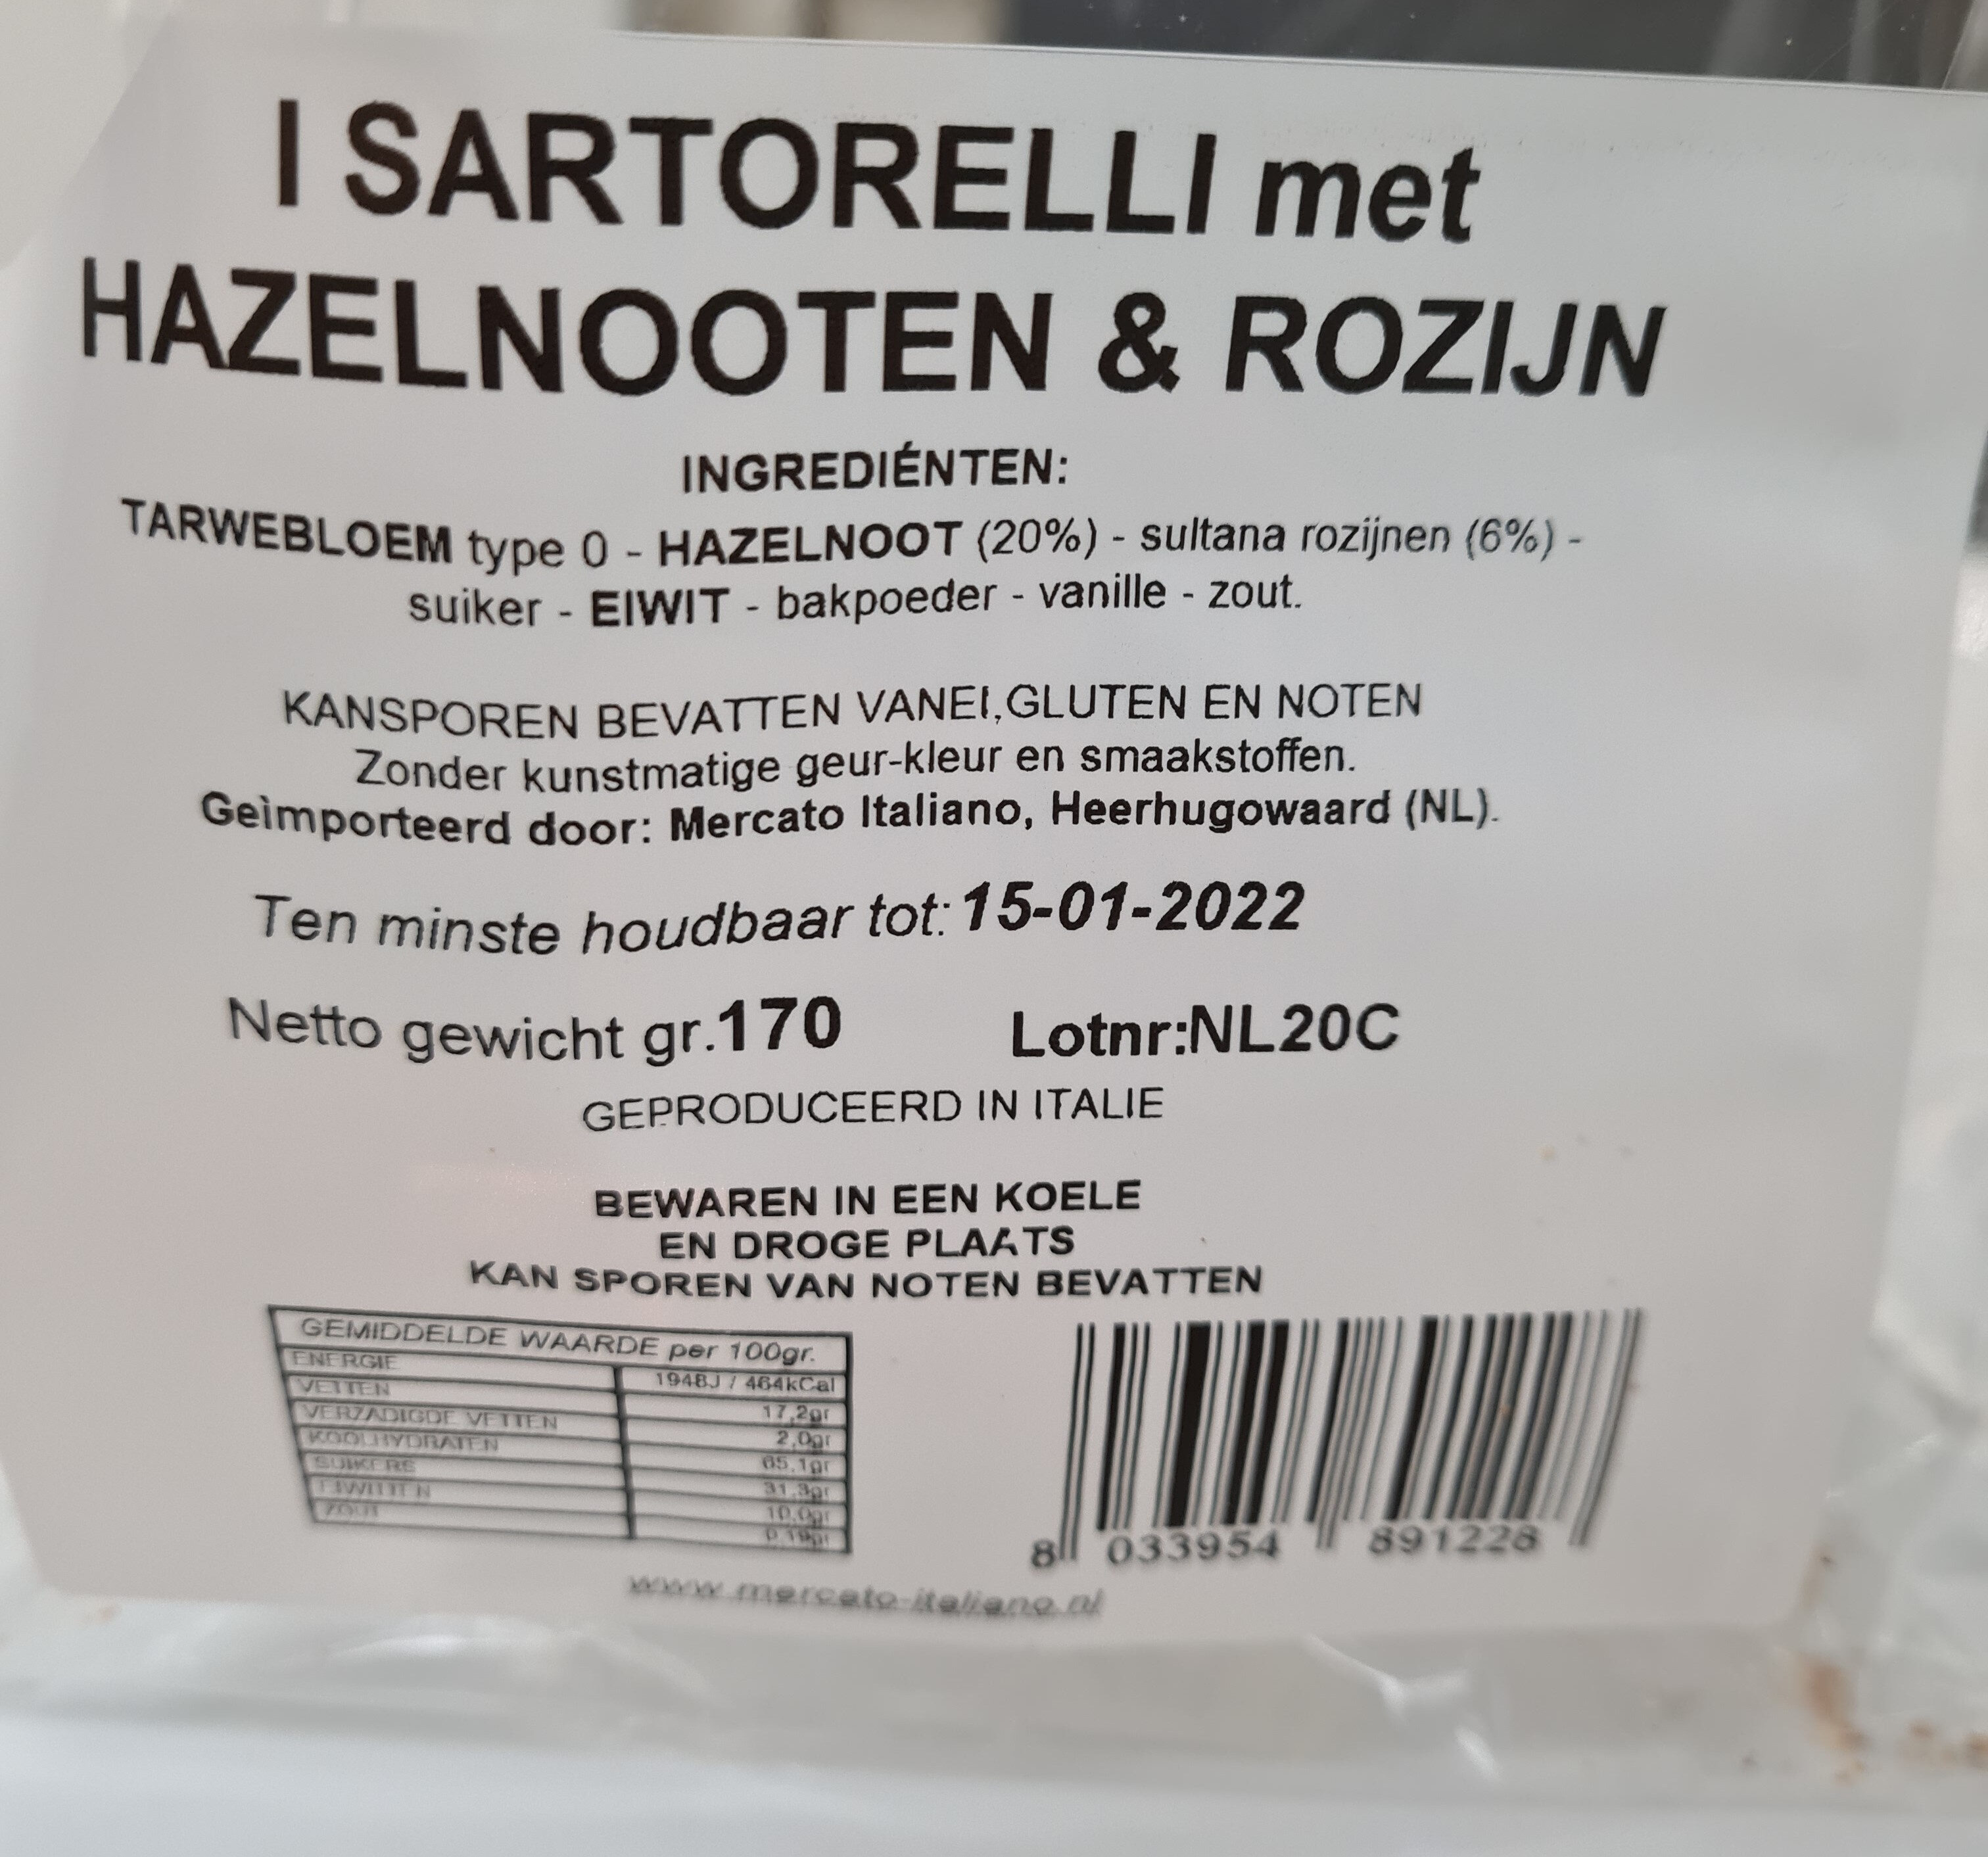 Sartorelli hazelnooten - Ingrediënten - en